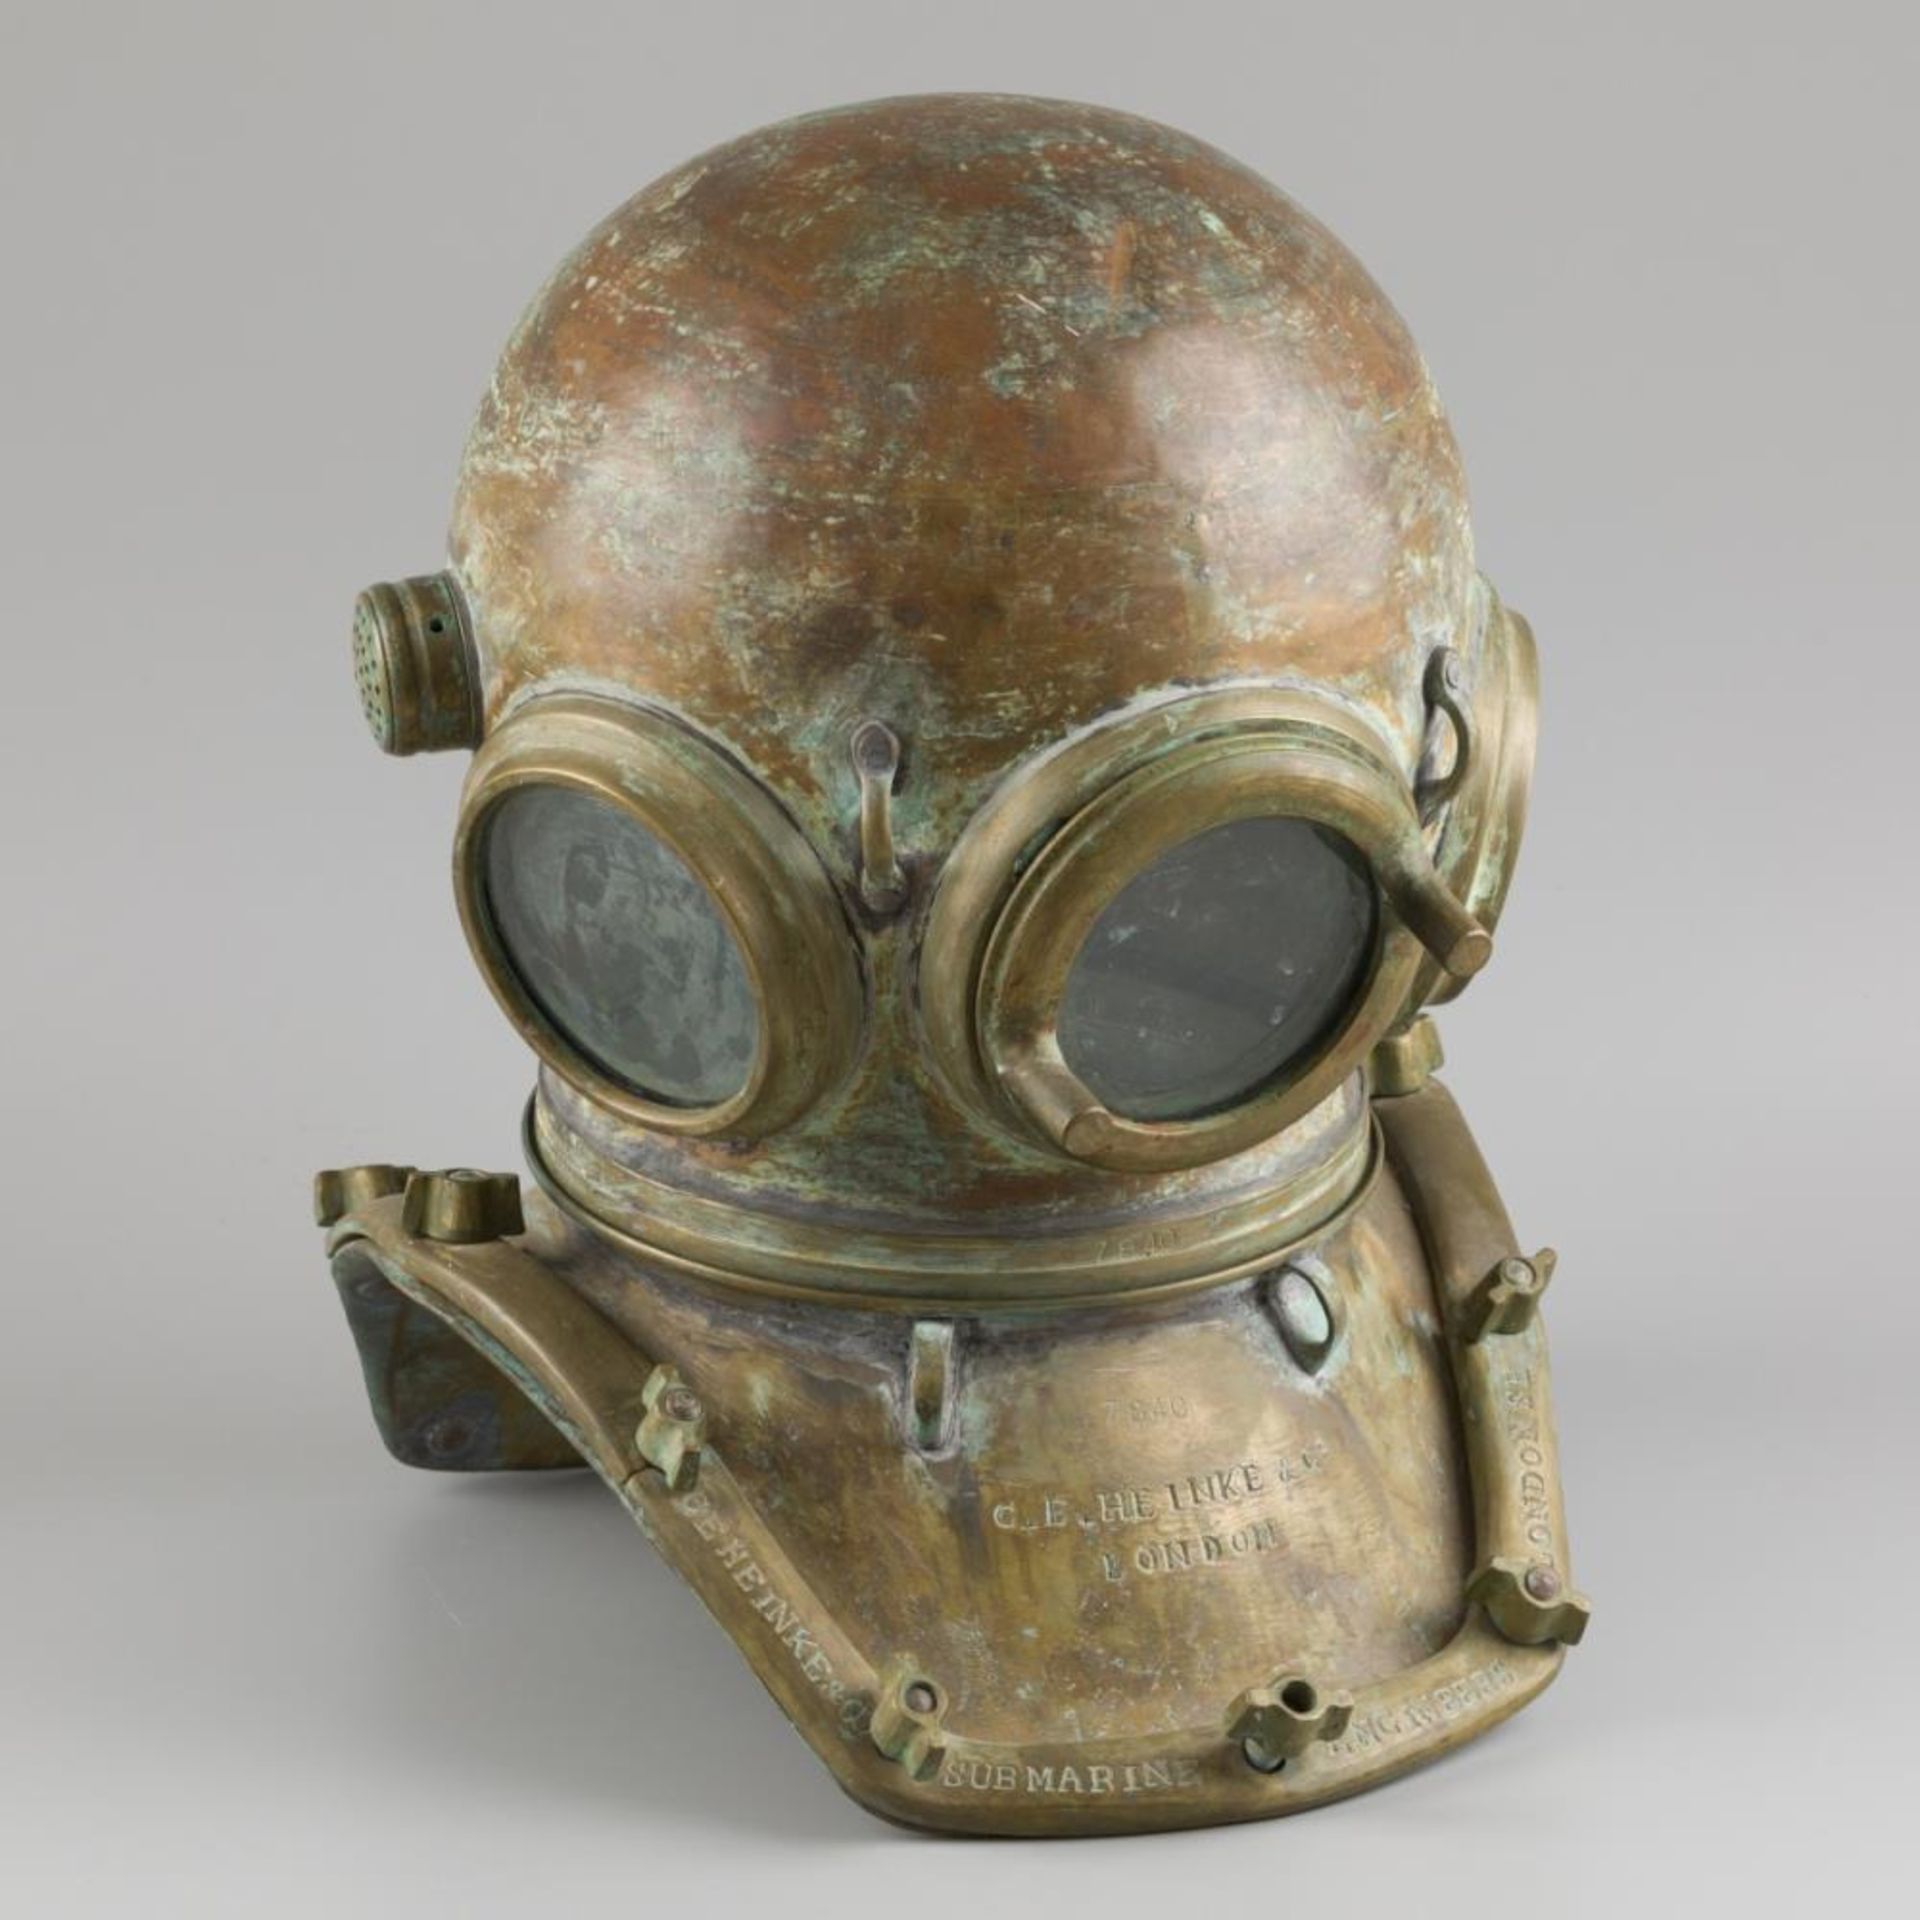 A 12-bolt brass diving helmet by C.E. HEINKE & Co. LTD, London, ca. 1930.